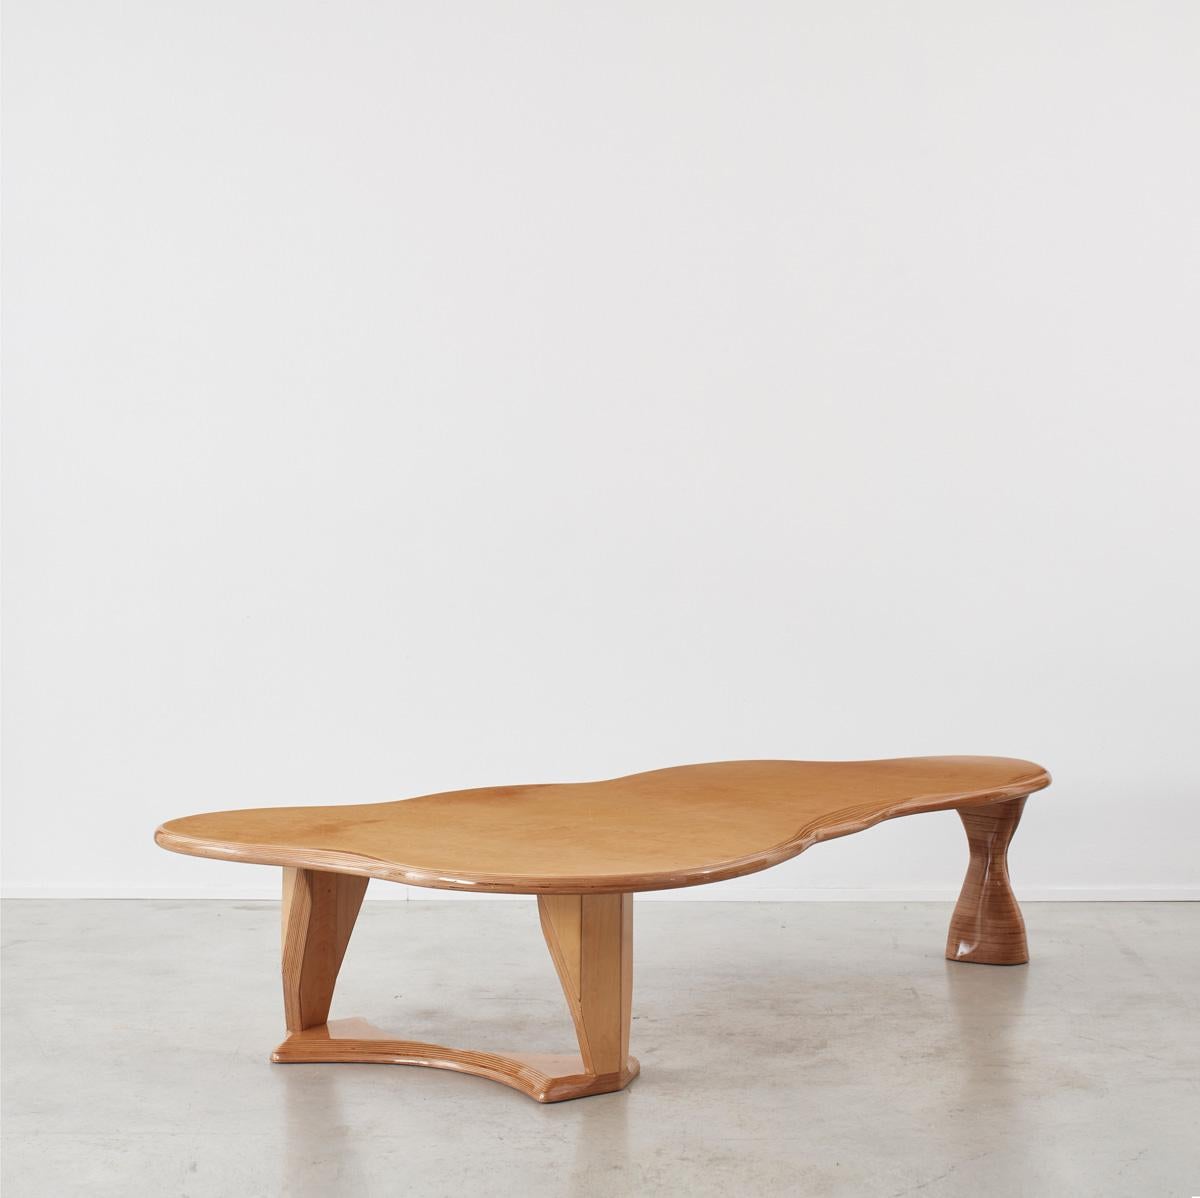 20th Century Twentieth Century Freeform Wooden Coffee Table